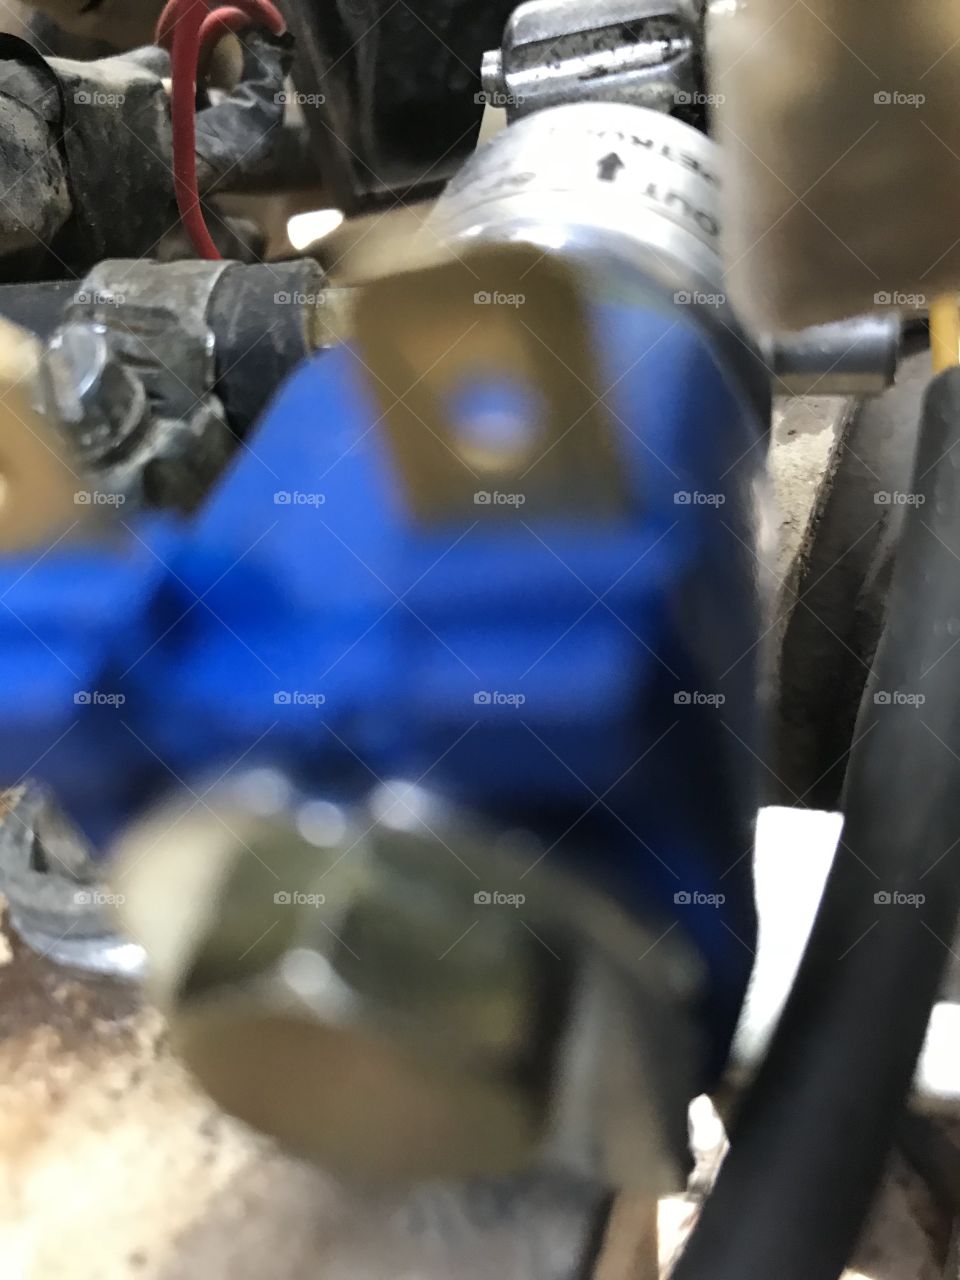 Focused valve